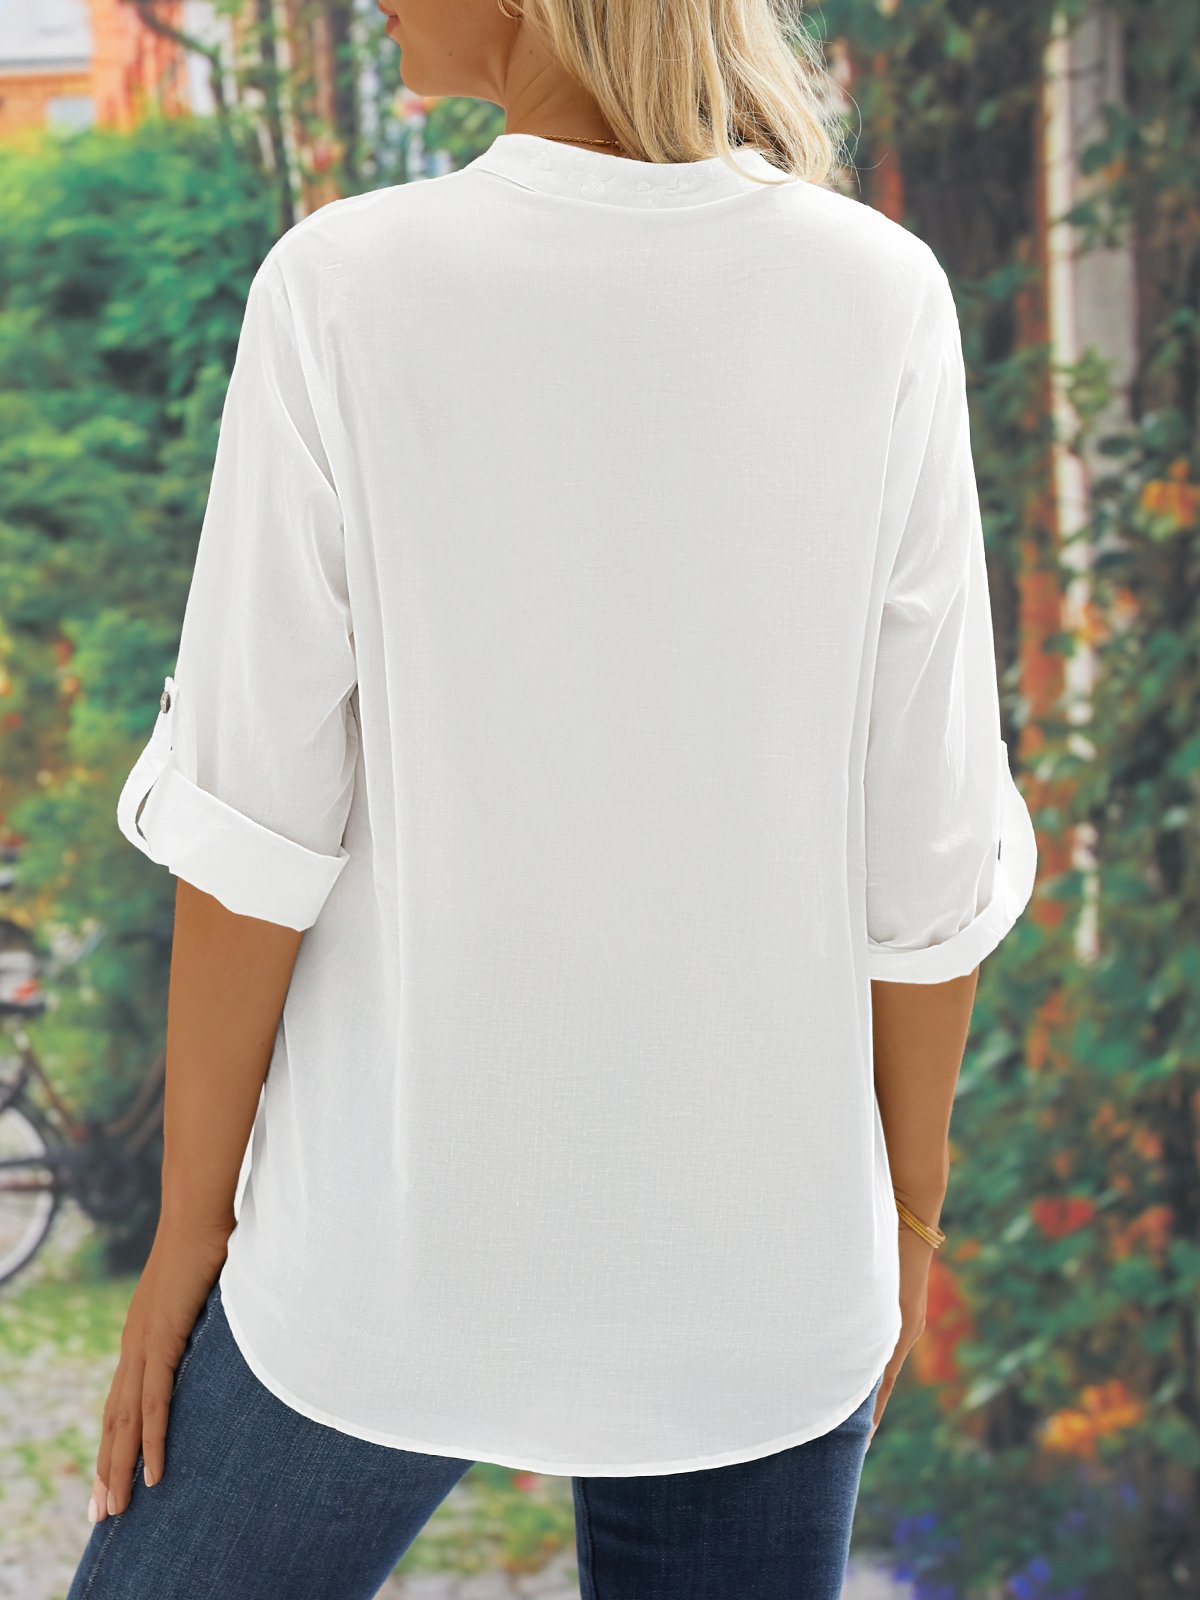 Shirt Collar Long Sleeve Plain Buttoned Regular Loose TUNIC Blouse For Women